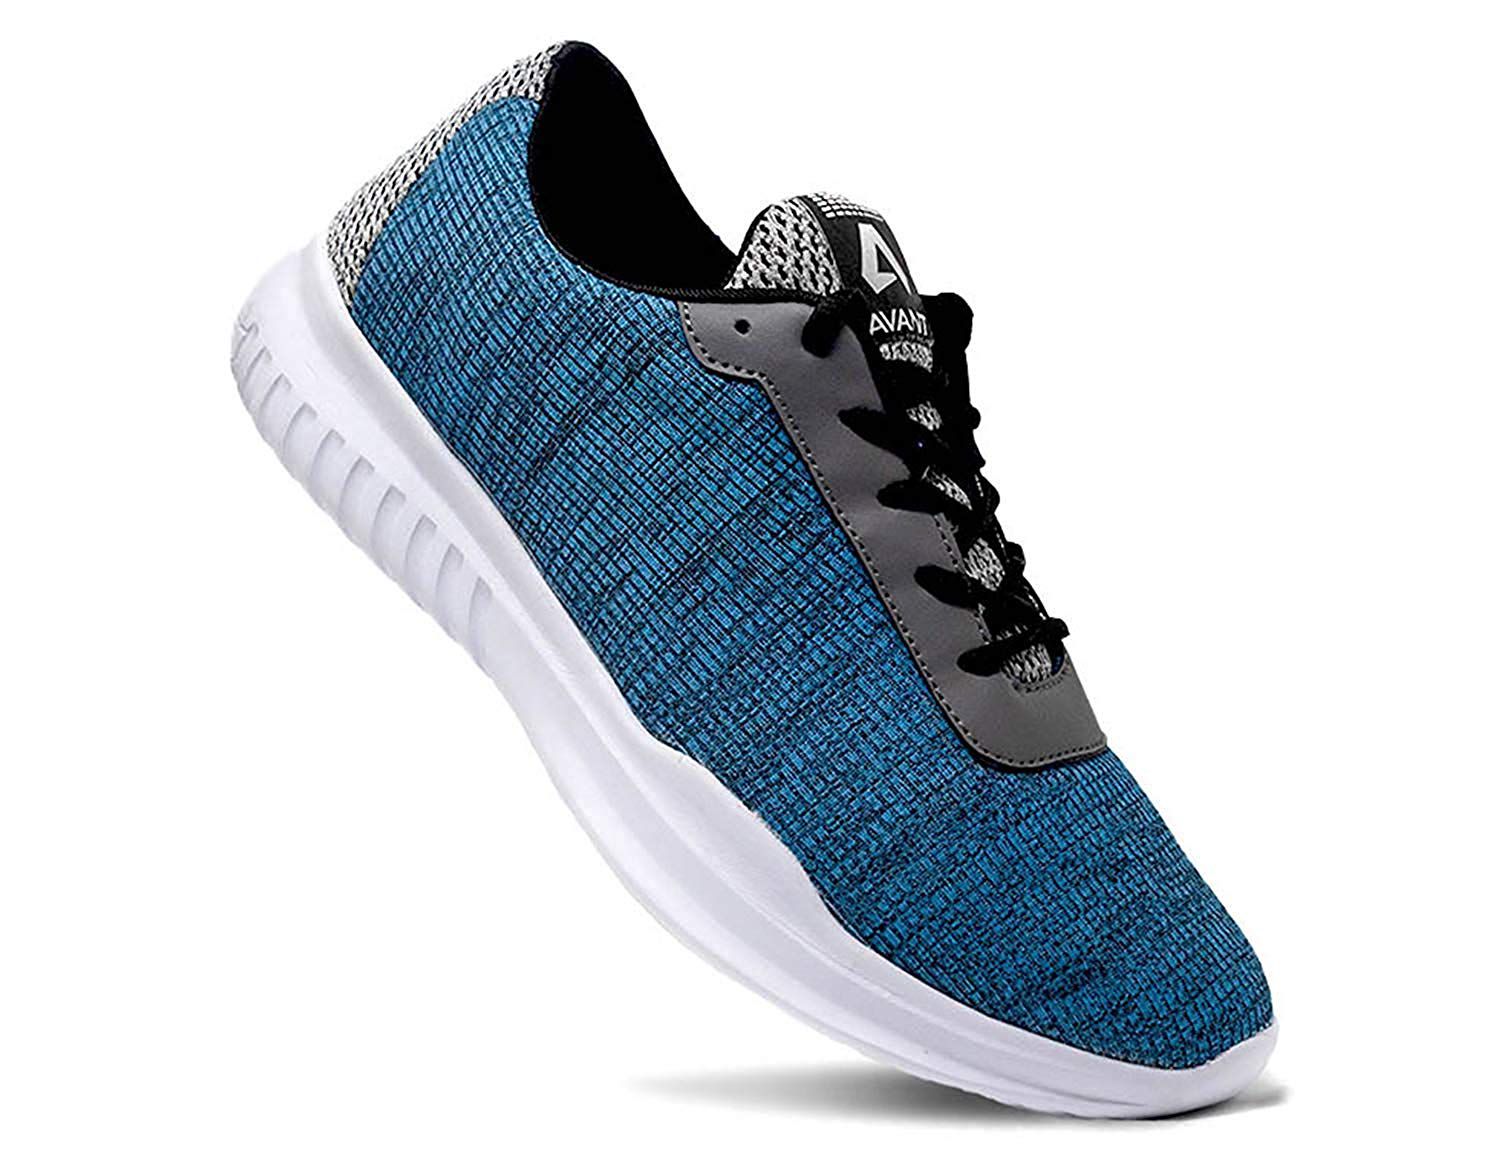 Avant Nitro Blue Running Shoes - Buy Avant Nitro Blue Running Shoes ...